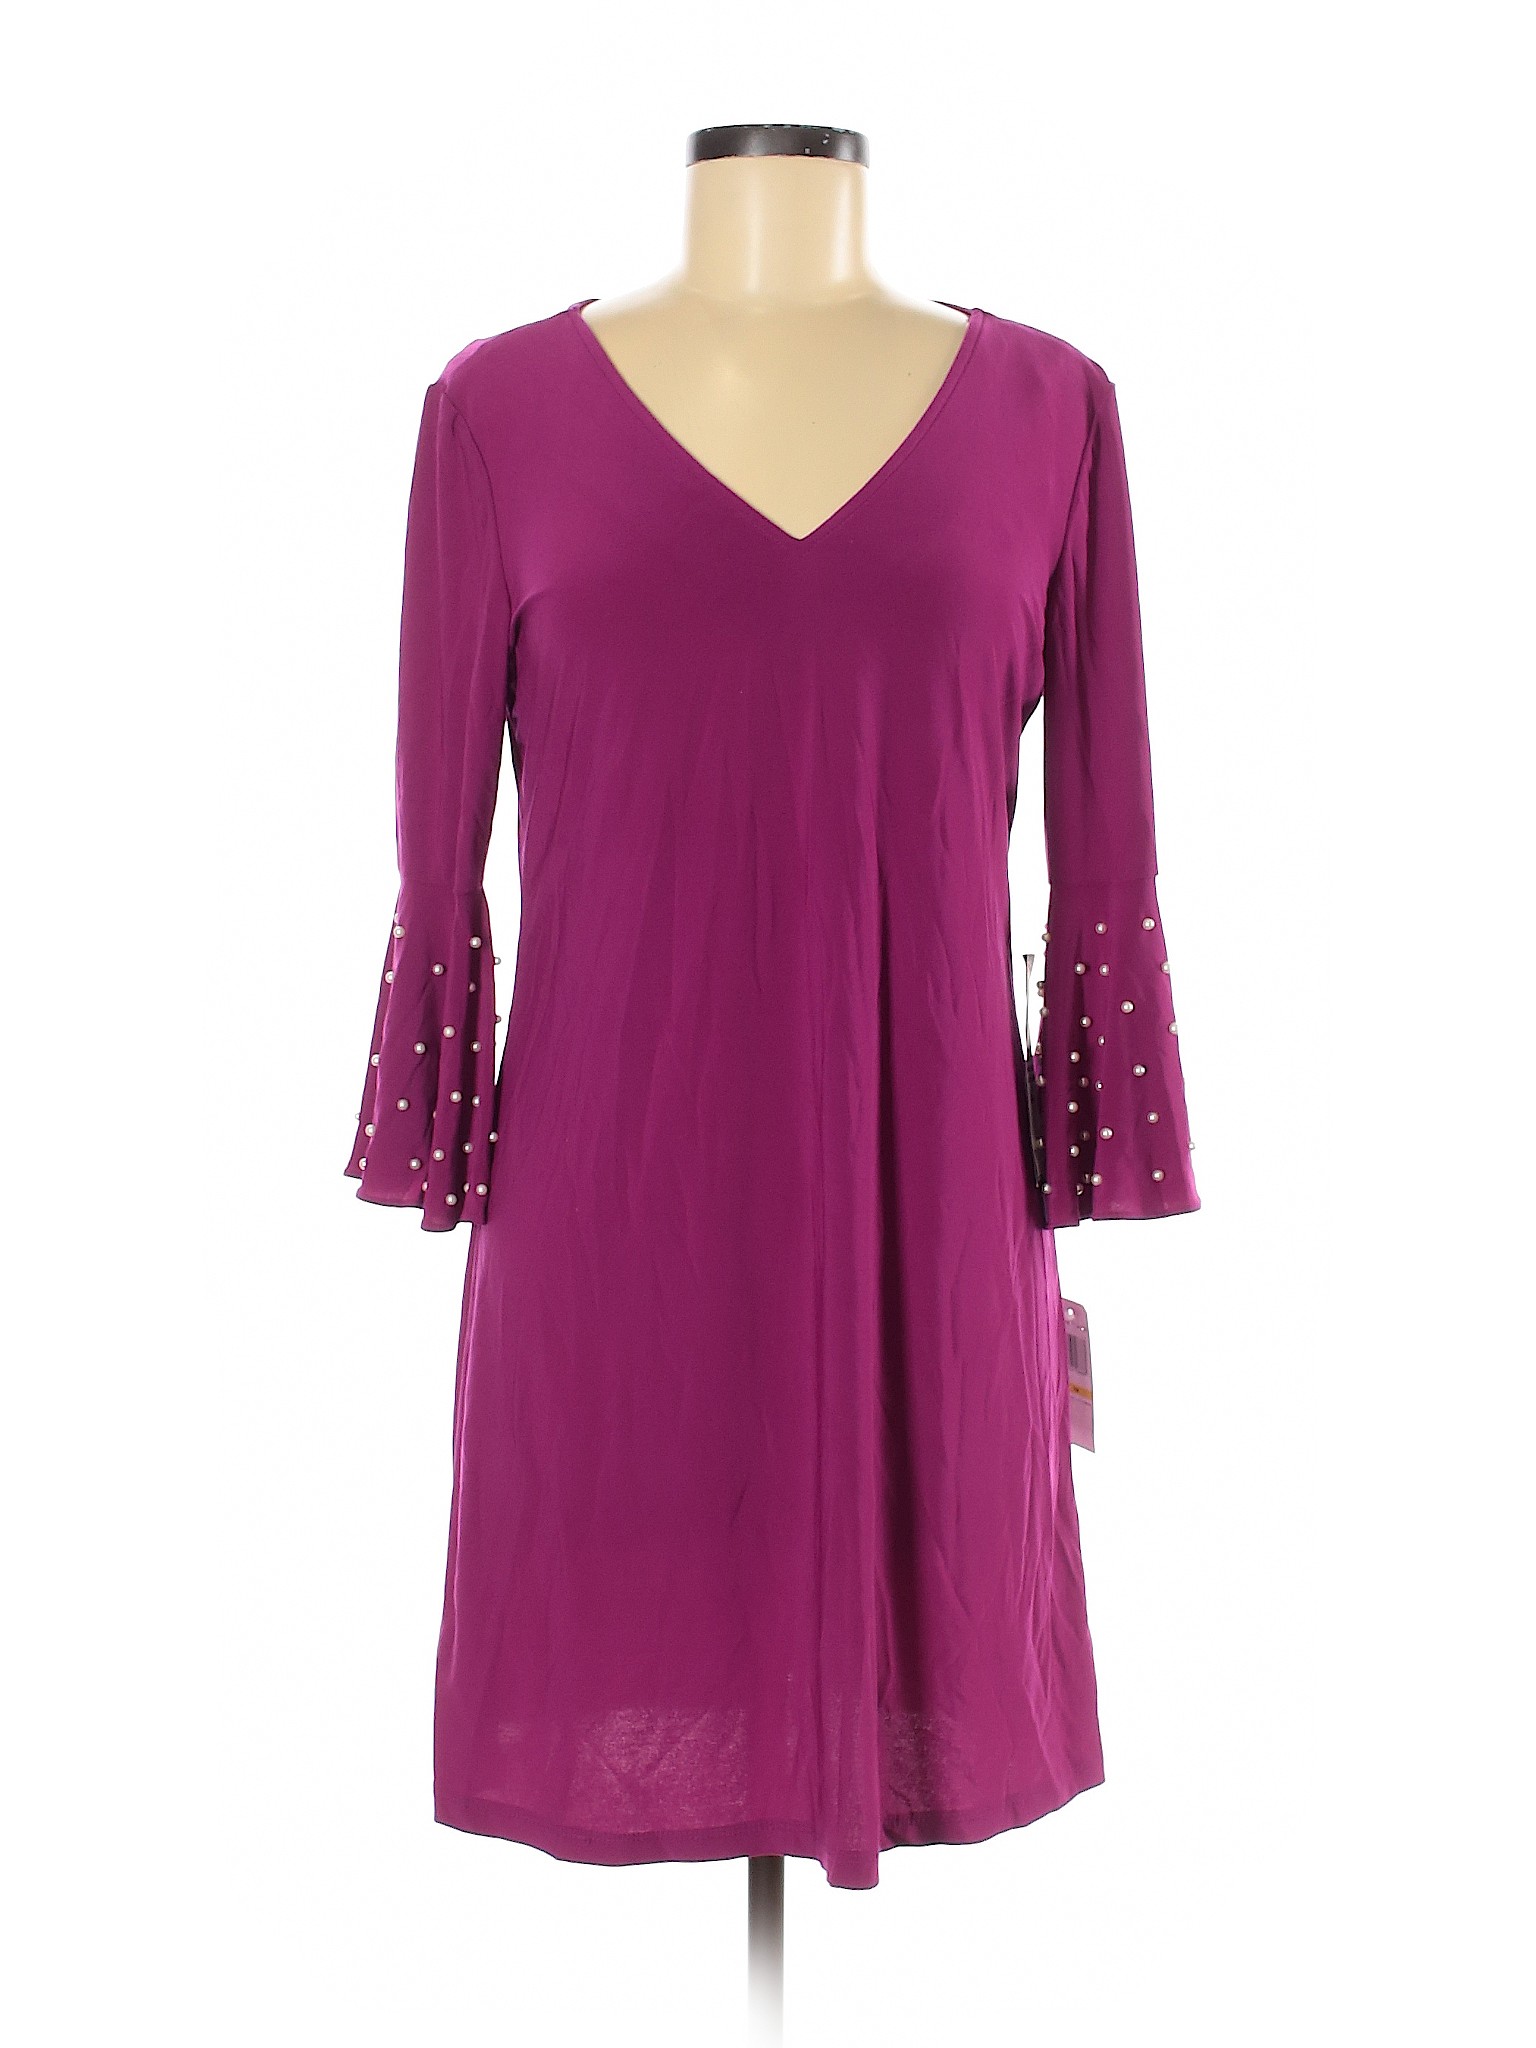 NWT MSK Women Purple Casual Dress M Petites | eBay